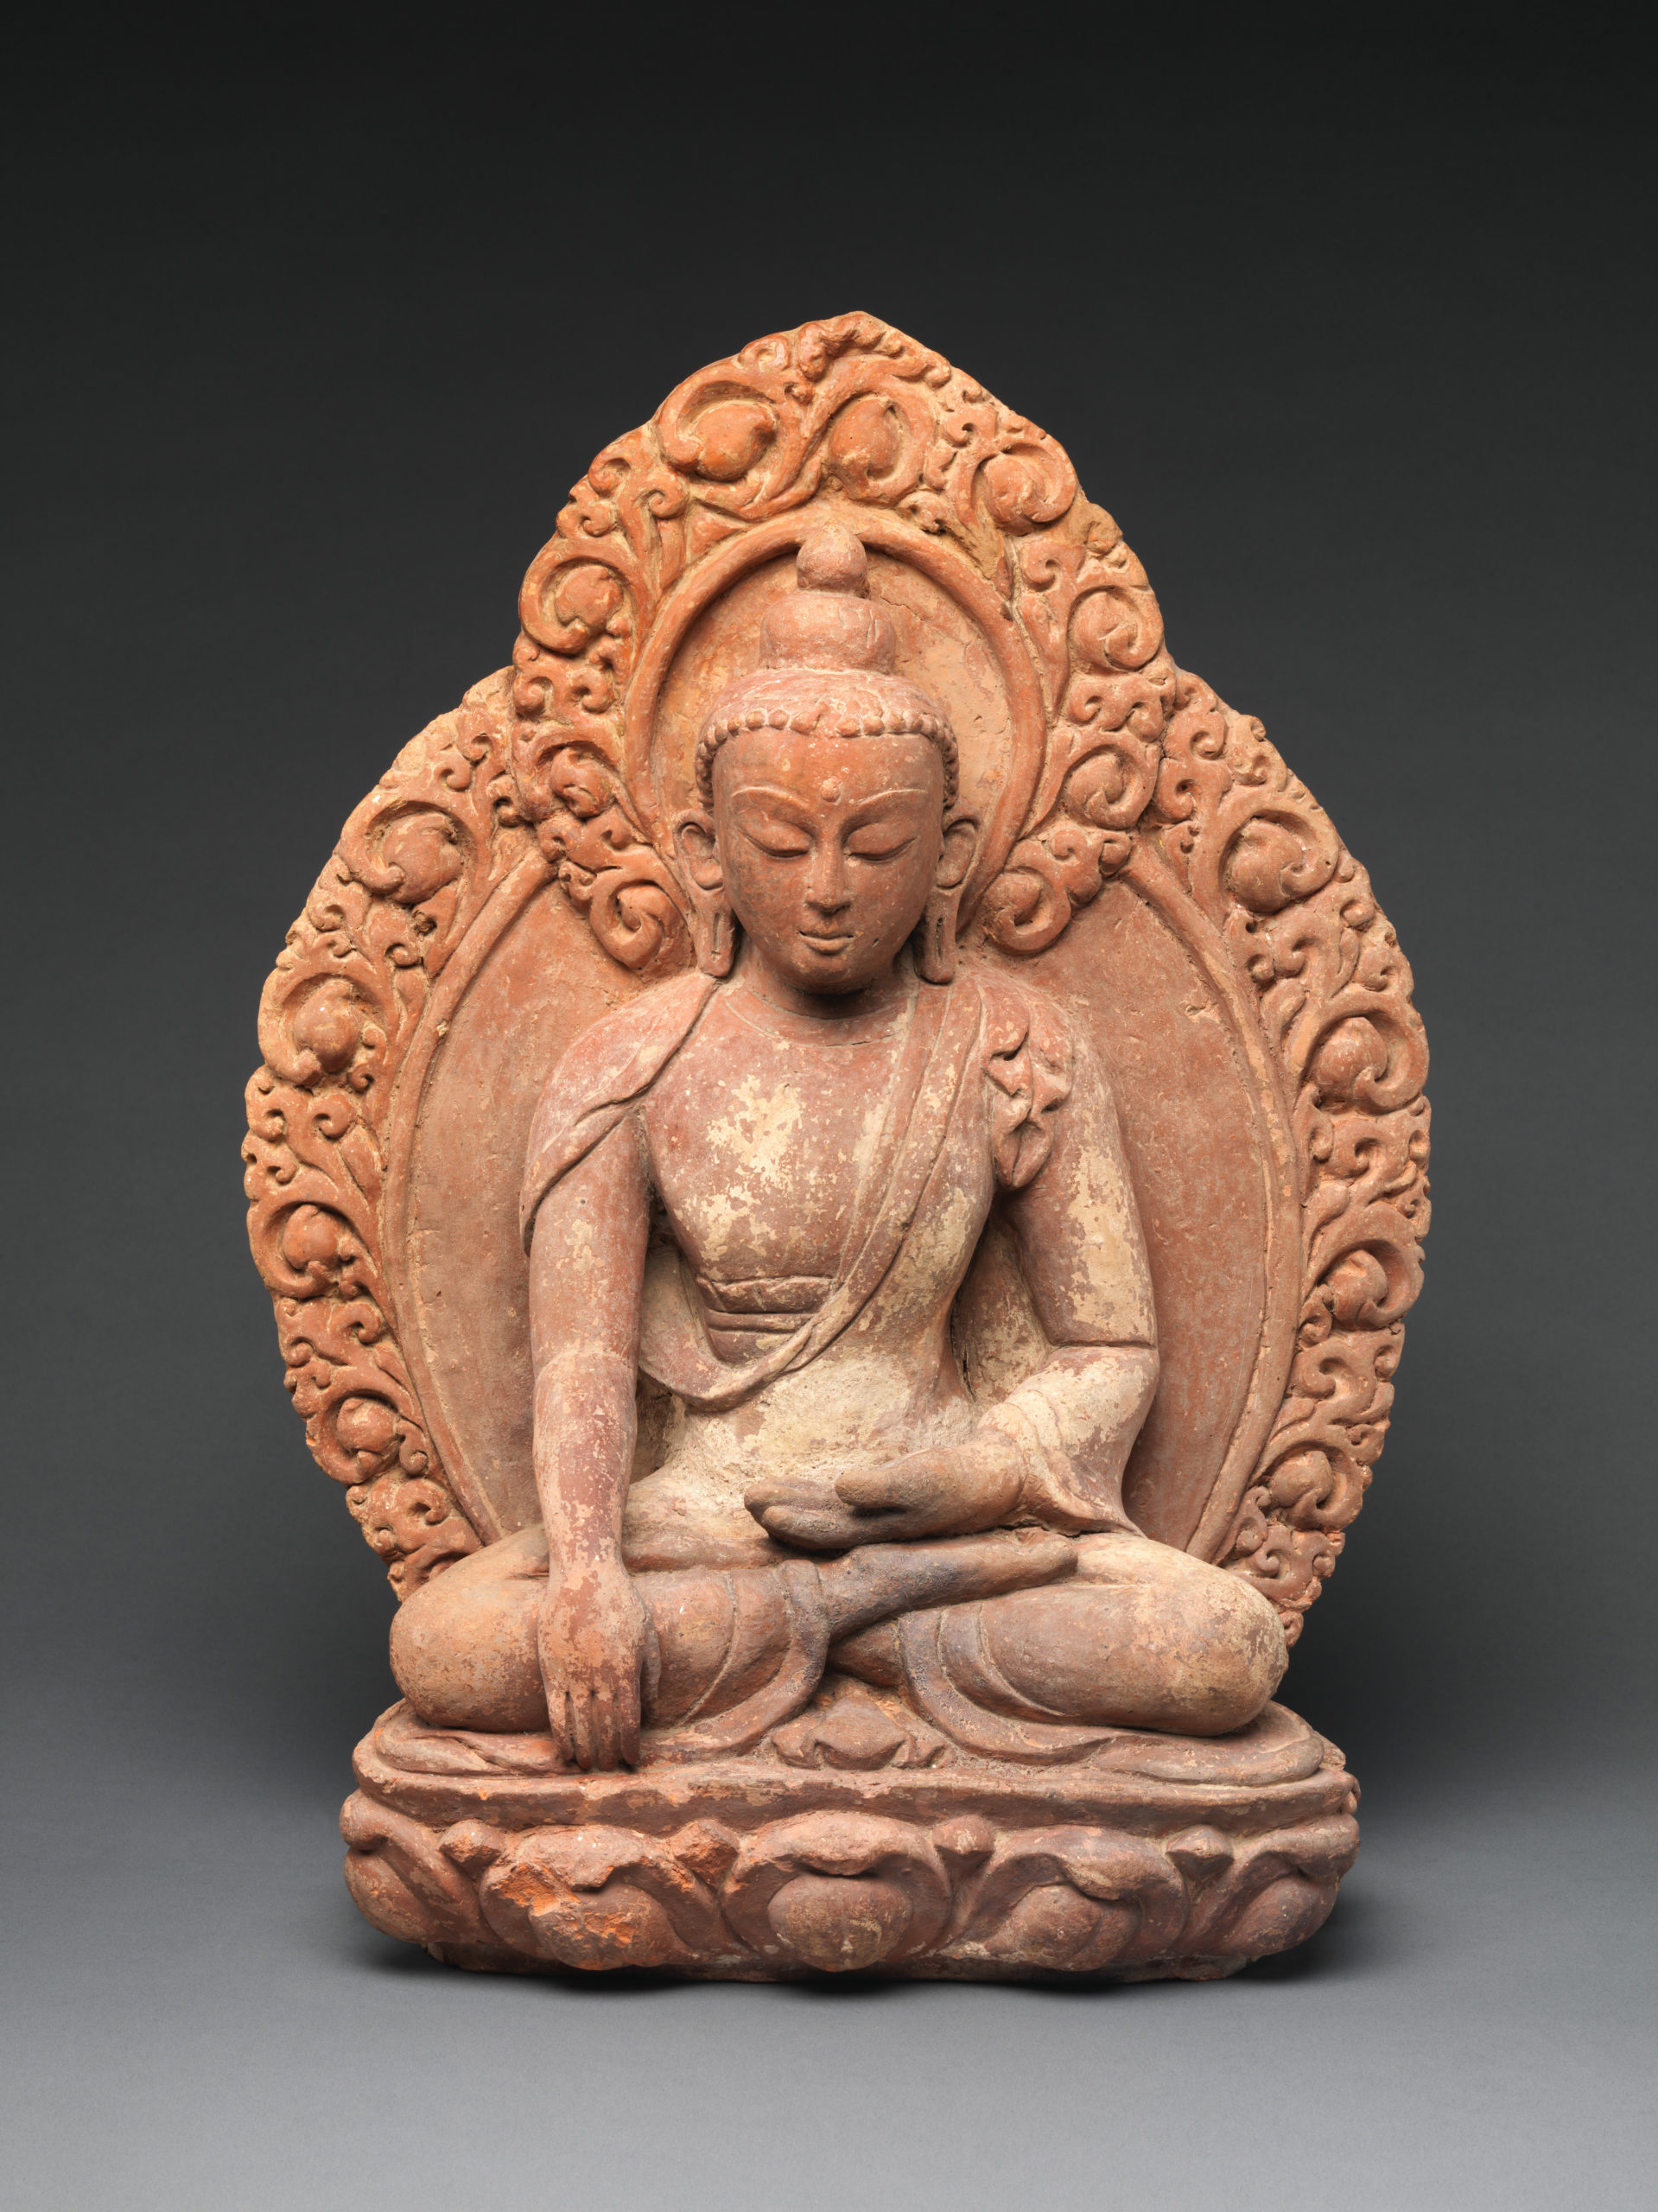 Mudras in Buddhist art (article)